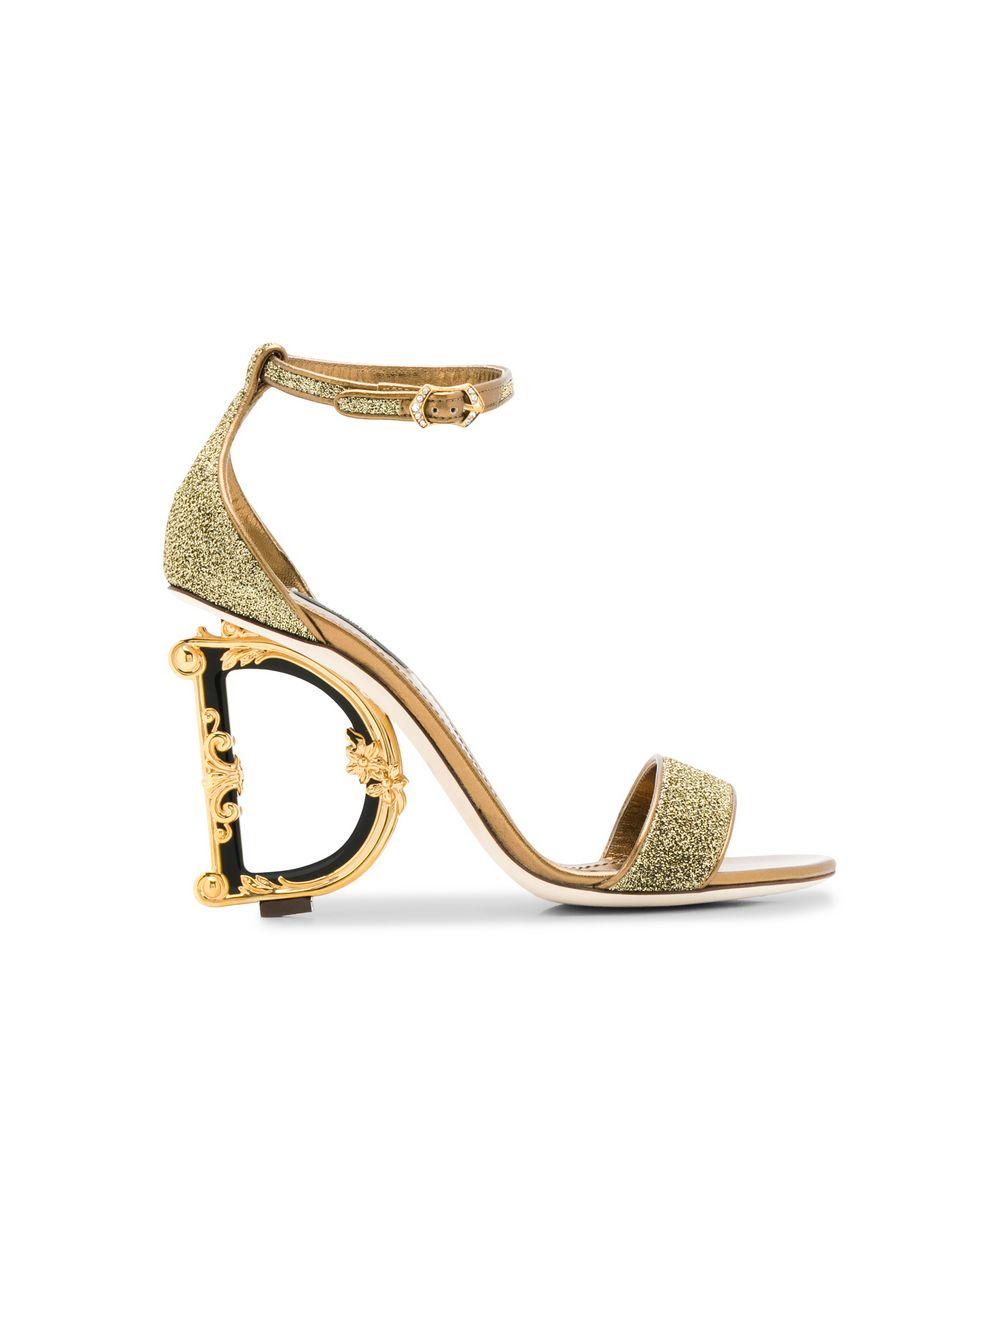 Dolce & Gabbana Leather G Glitter Sandals in Gold (Metallic) - Lyst